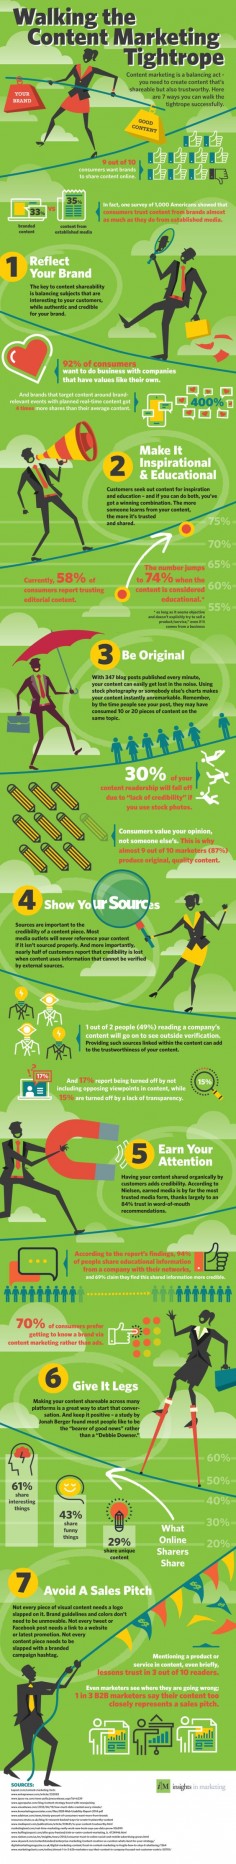 Content Marketing Basics 7 Steps to Shareworthy and Trustworthy Content #ContentMarketing #Business